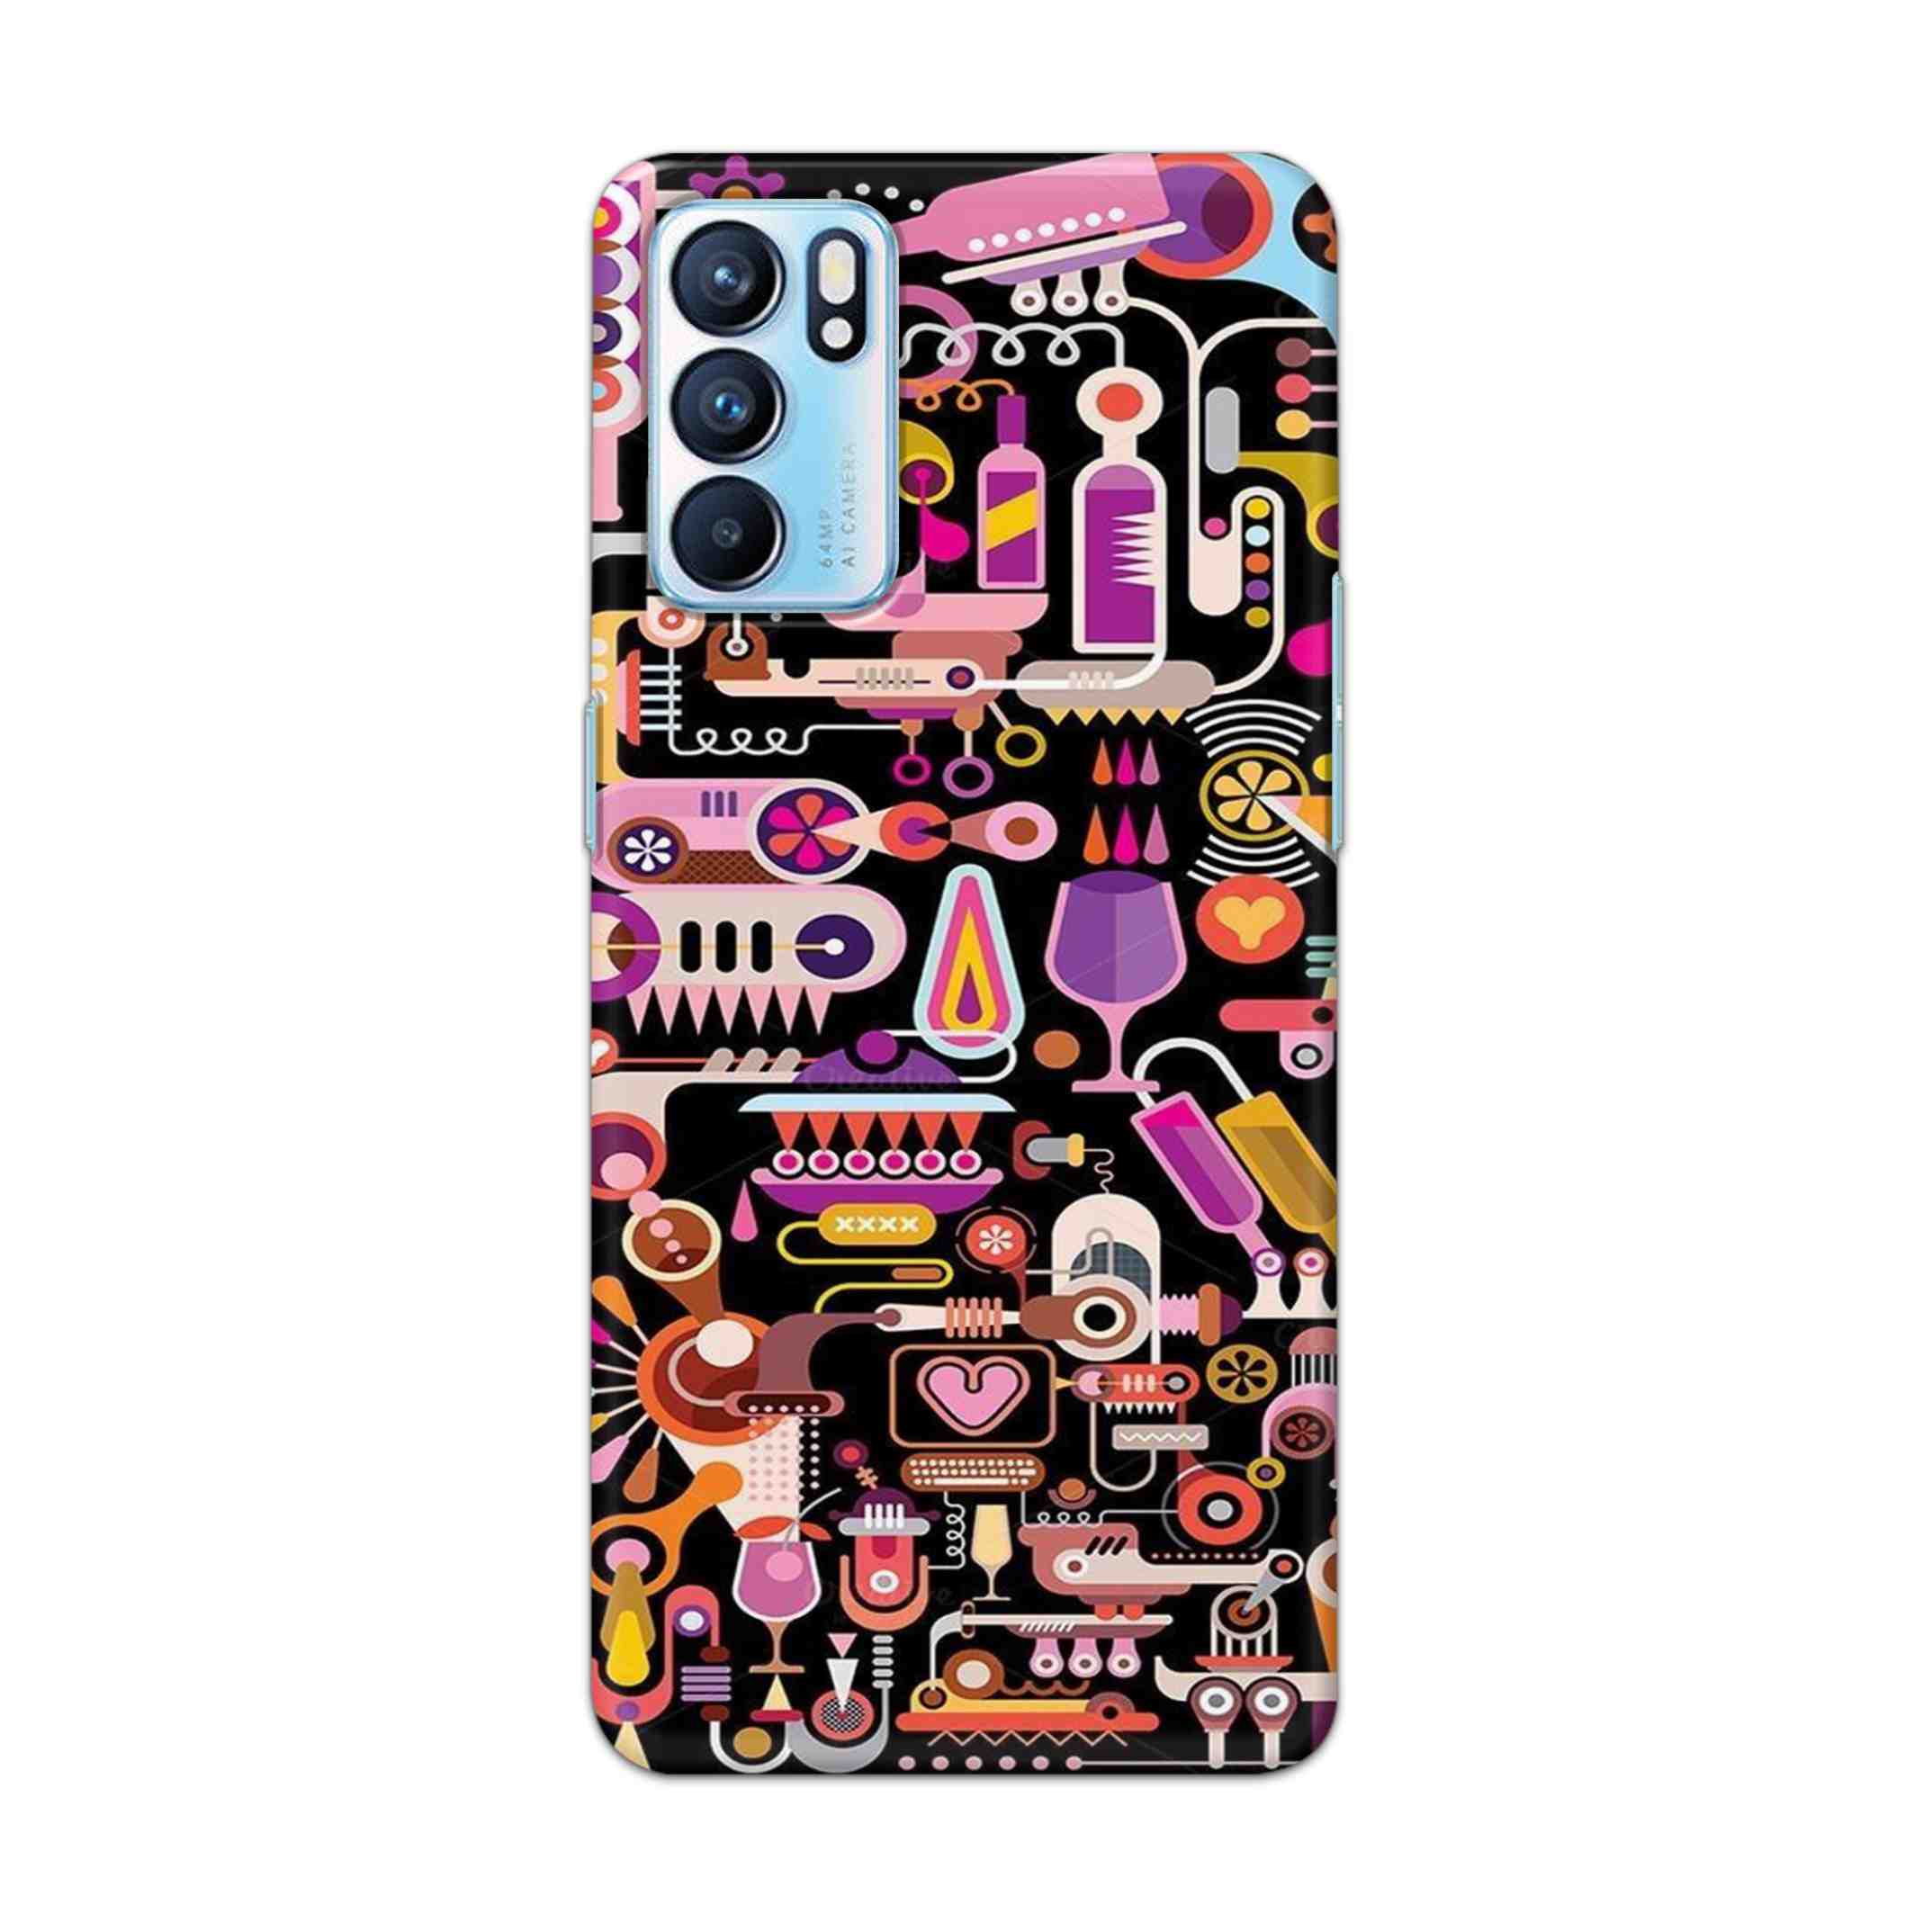 Buy Lab Art Hard Back Mobile Phone Case Cover For OPPO RENO 6 5G Online